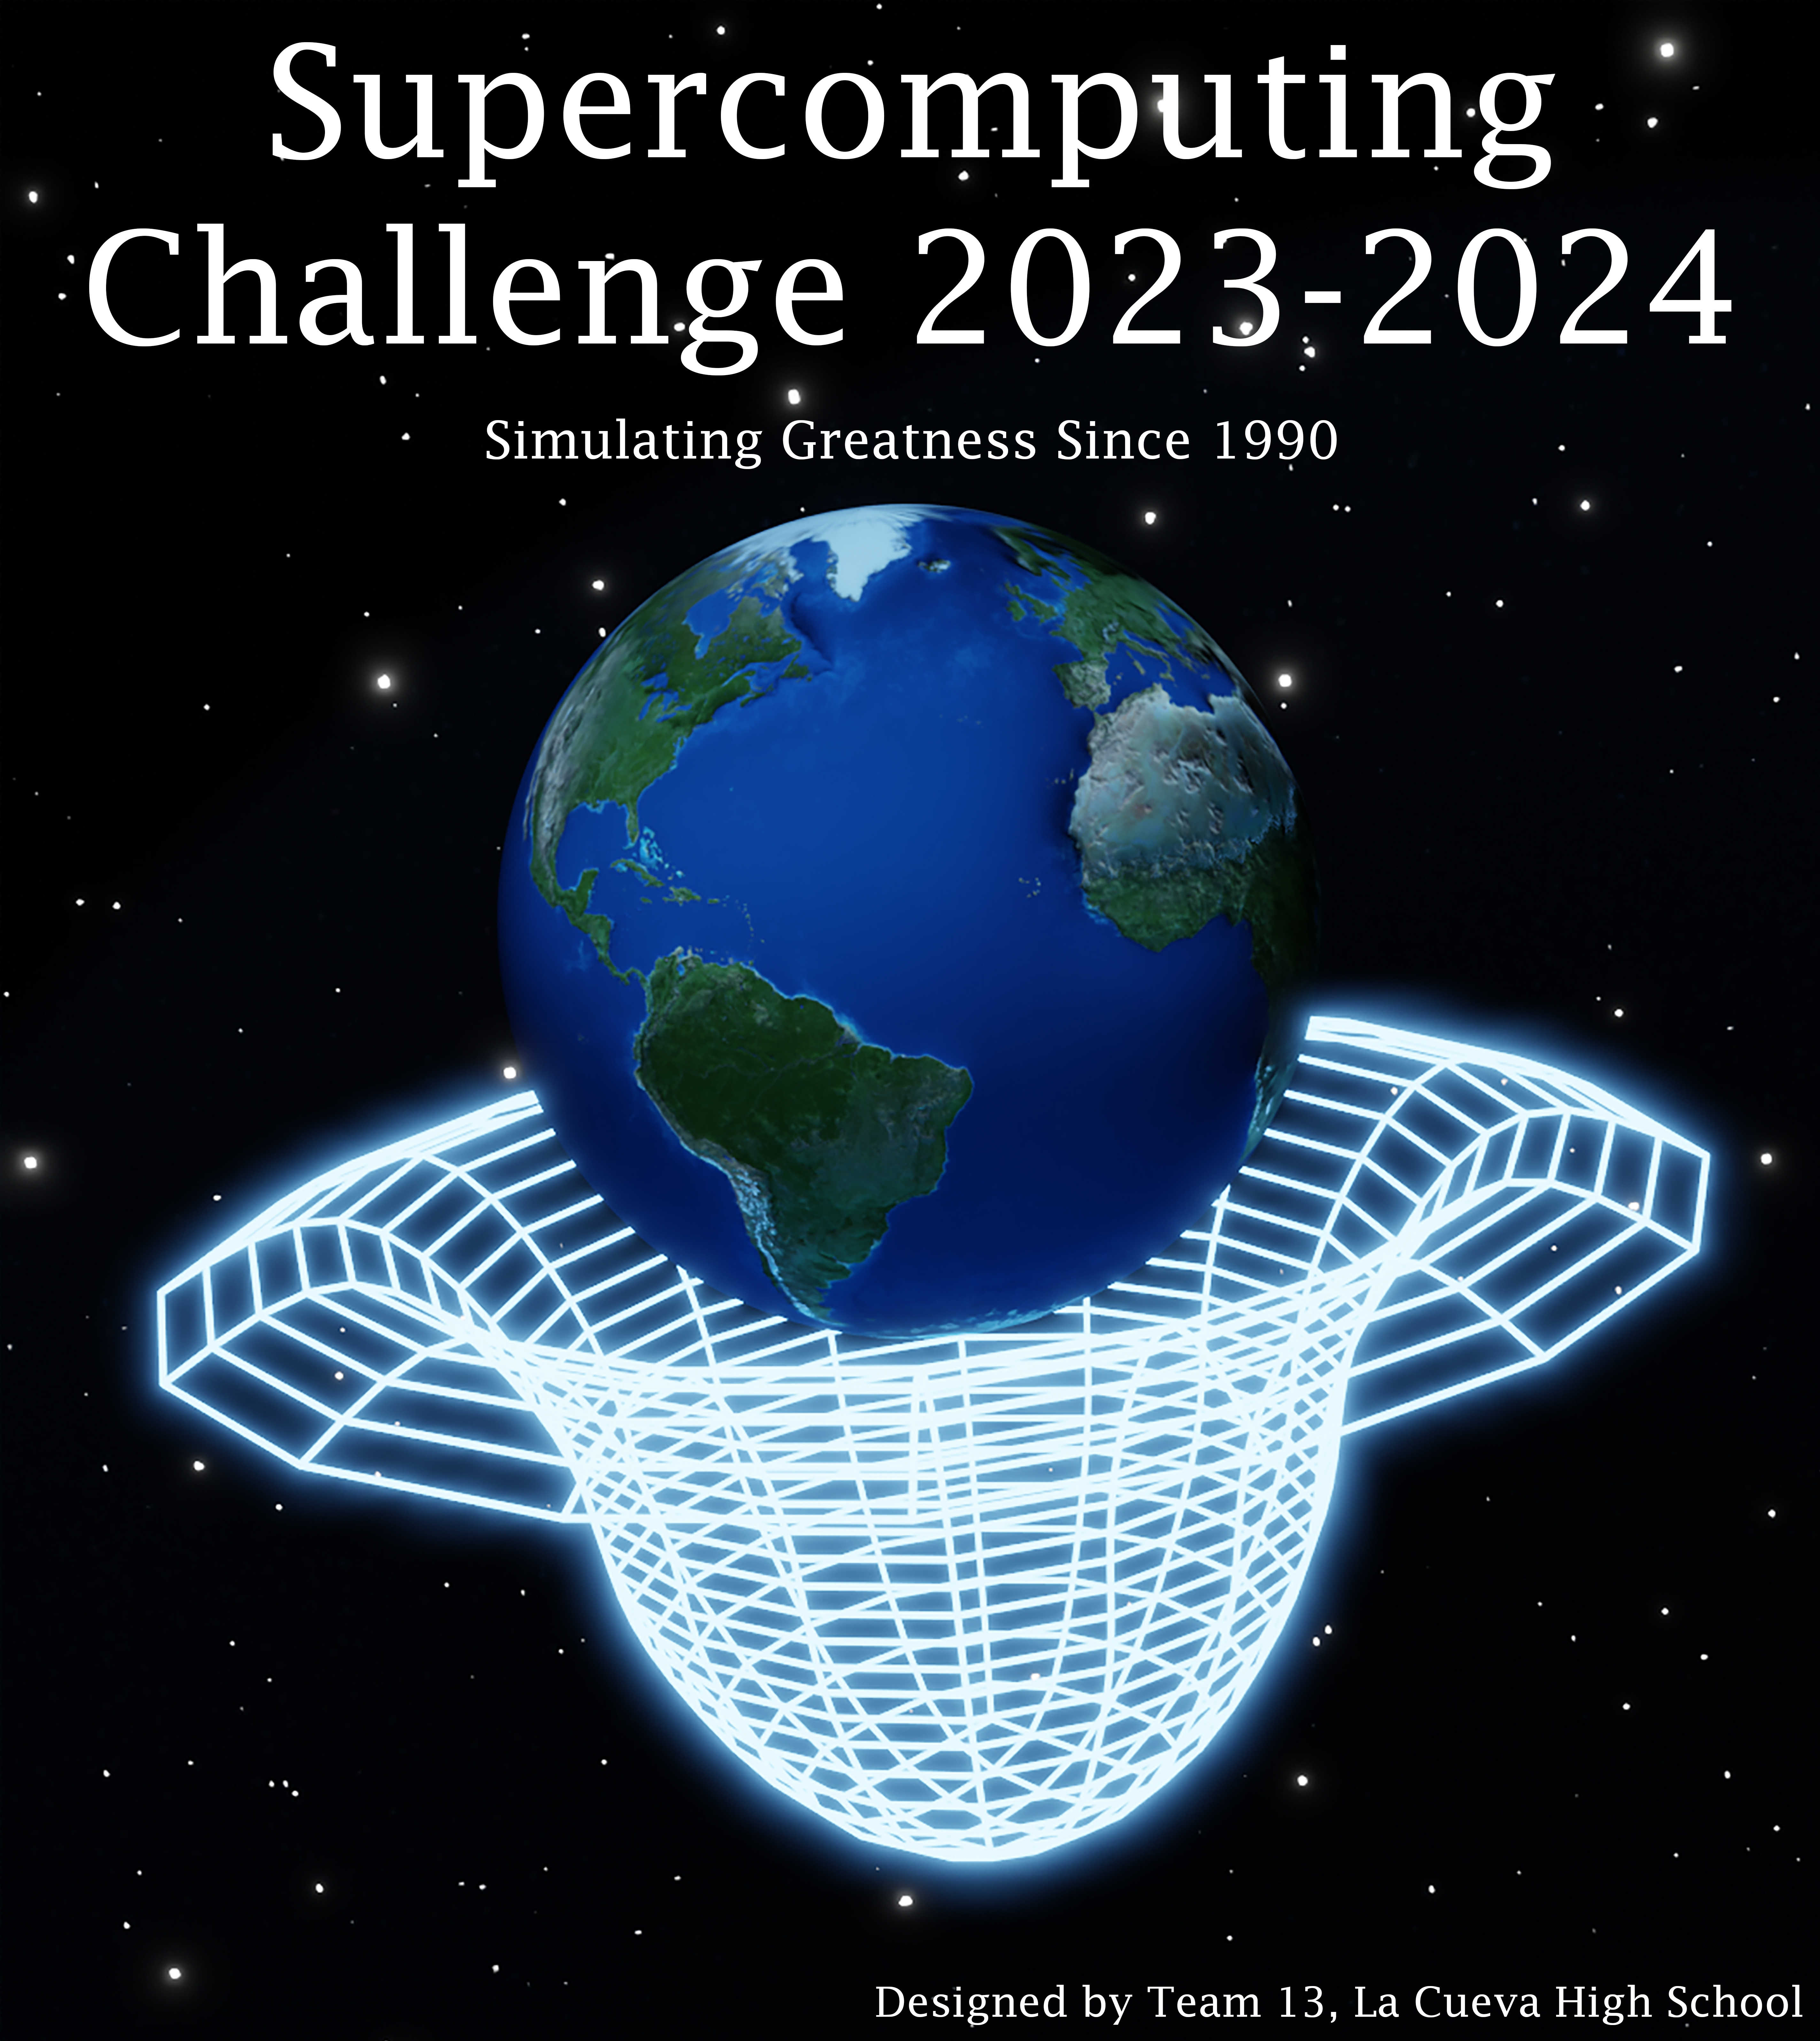 The Challenge Archive Challenge